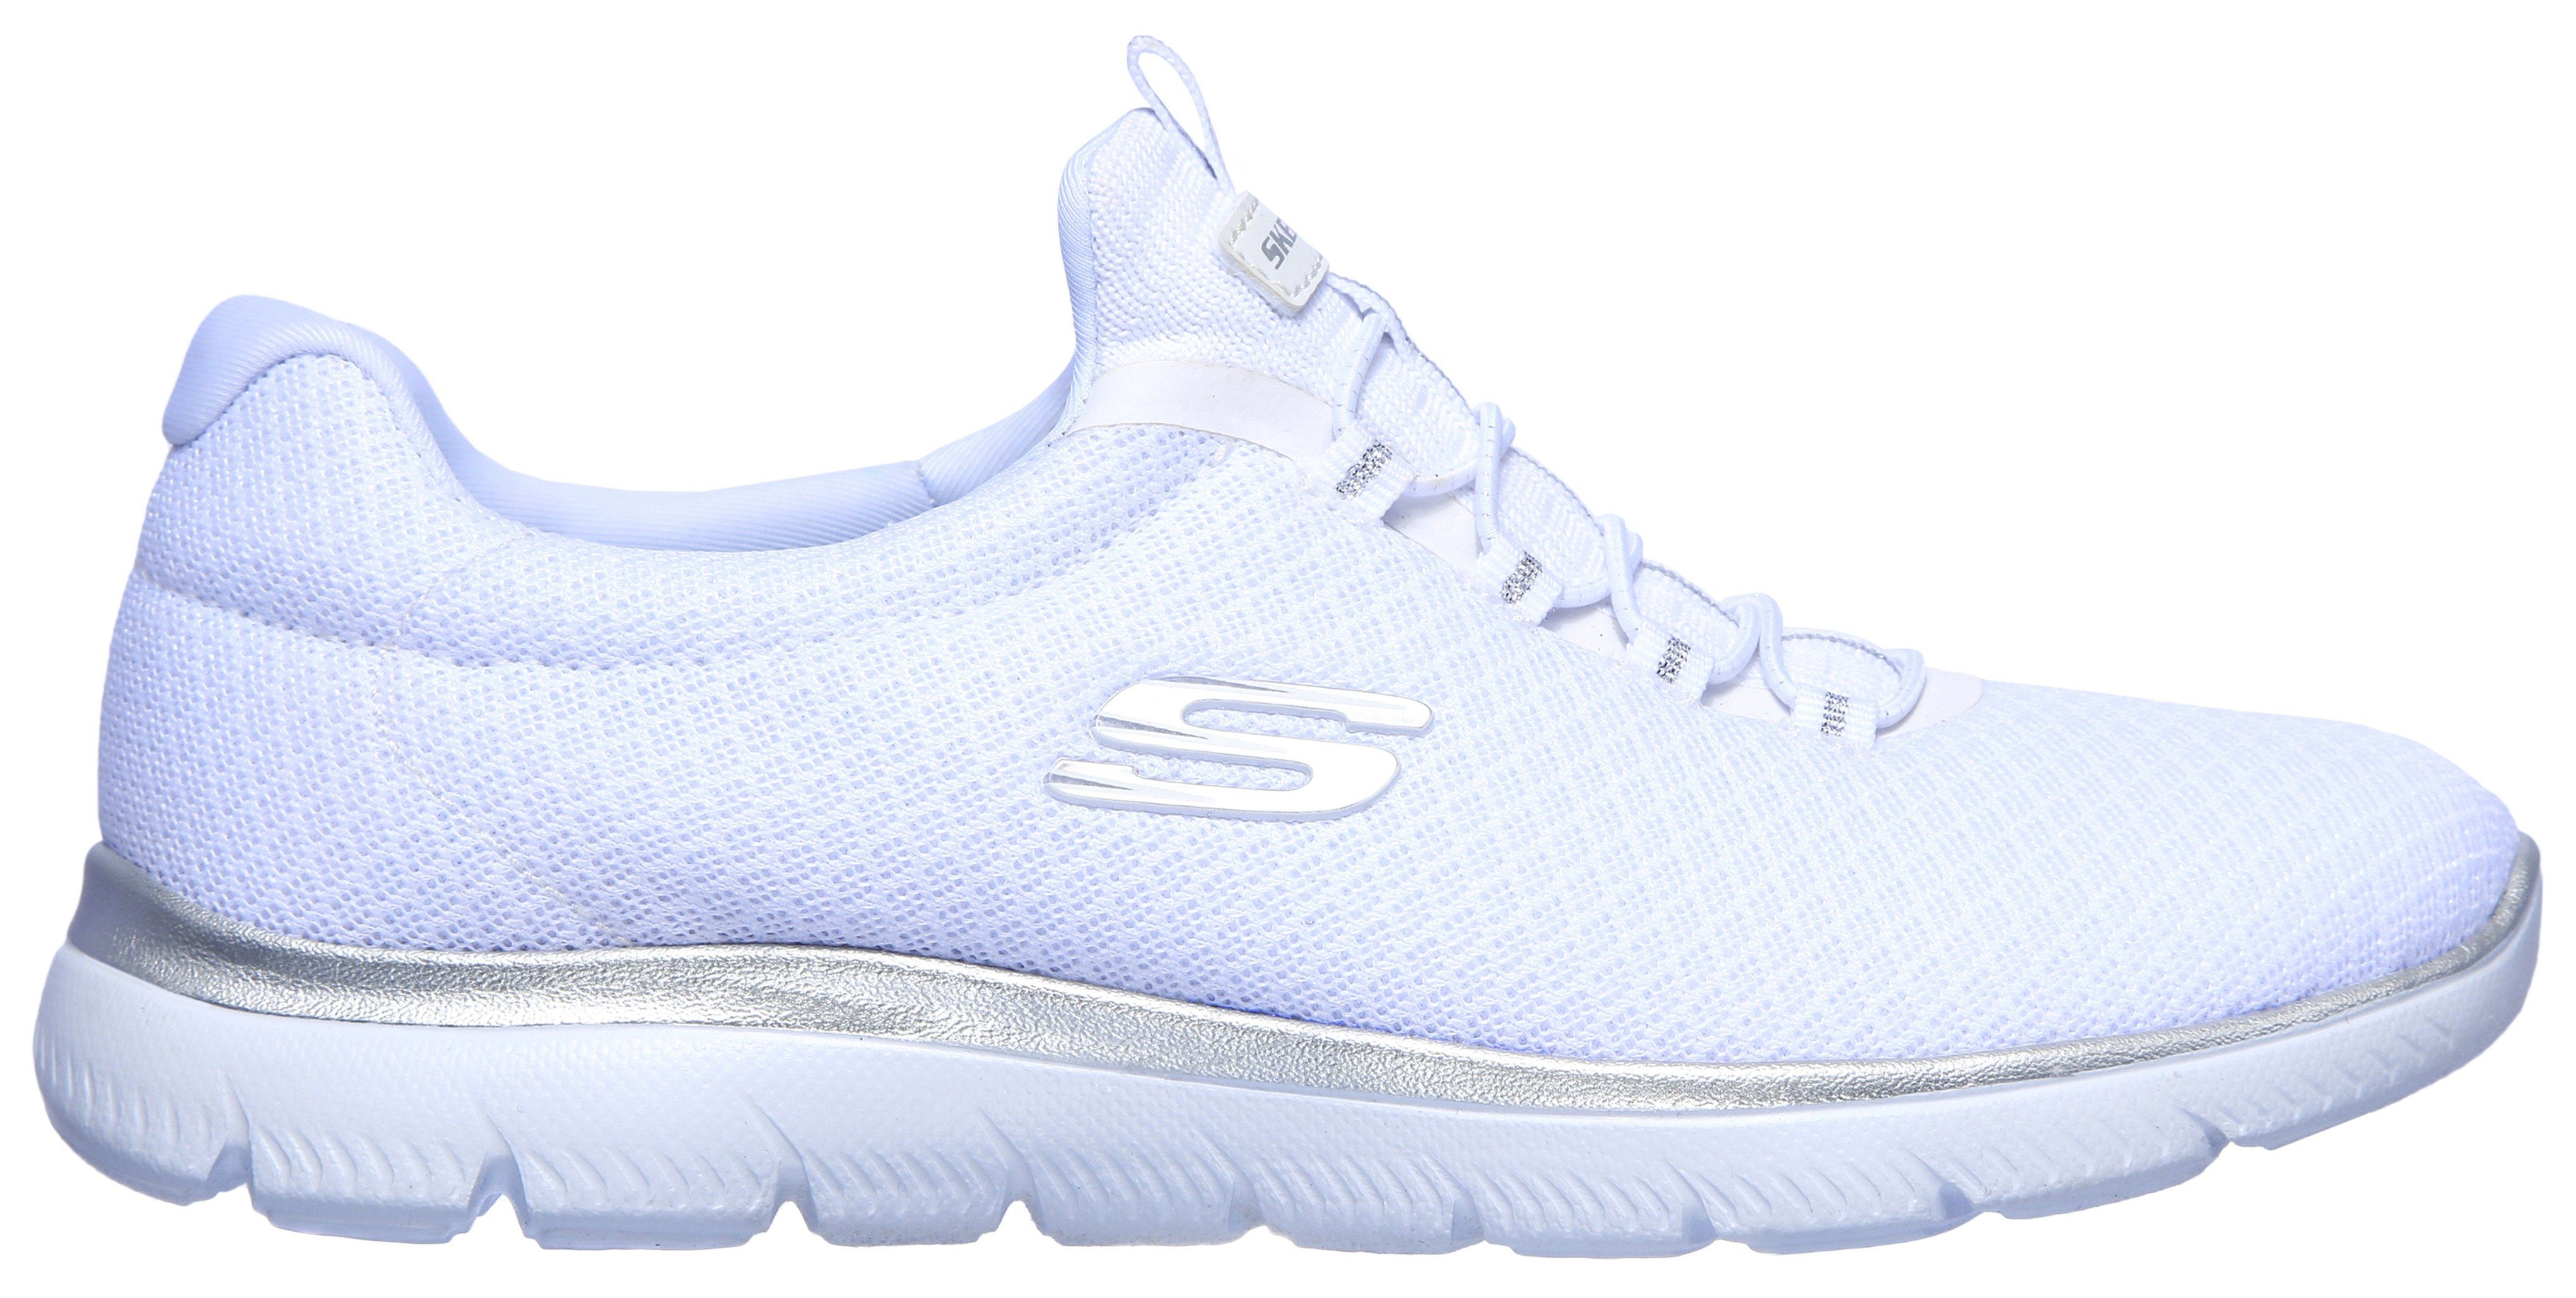 Slip-On Sneaker weiß-silberfarben Skechers SUMMITS dezenten Kontrast-Details mit